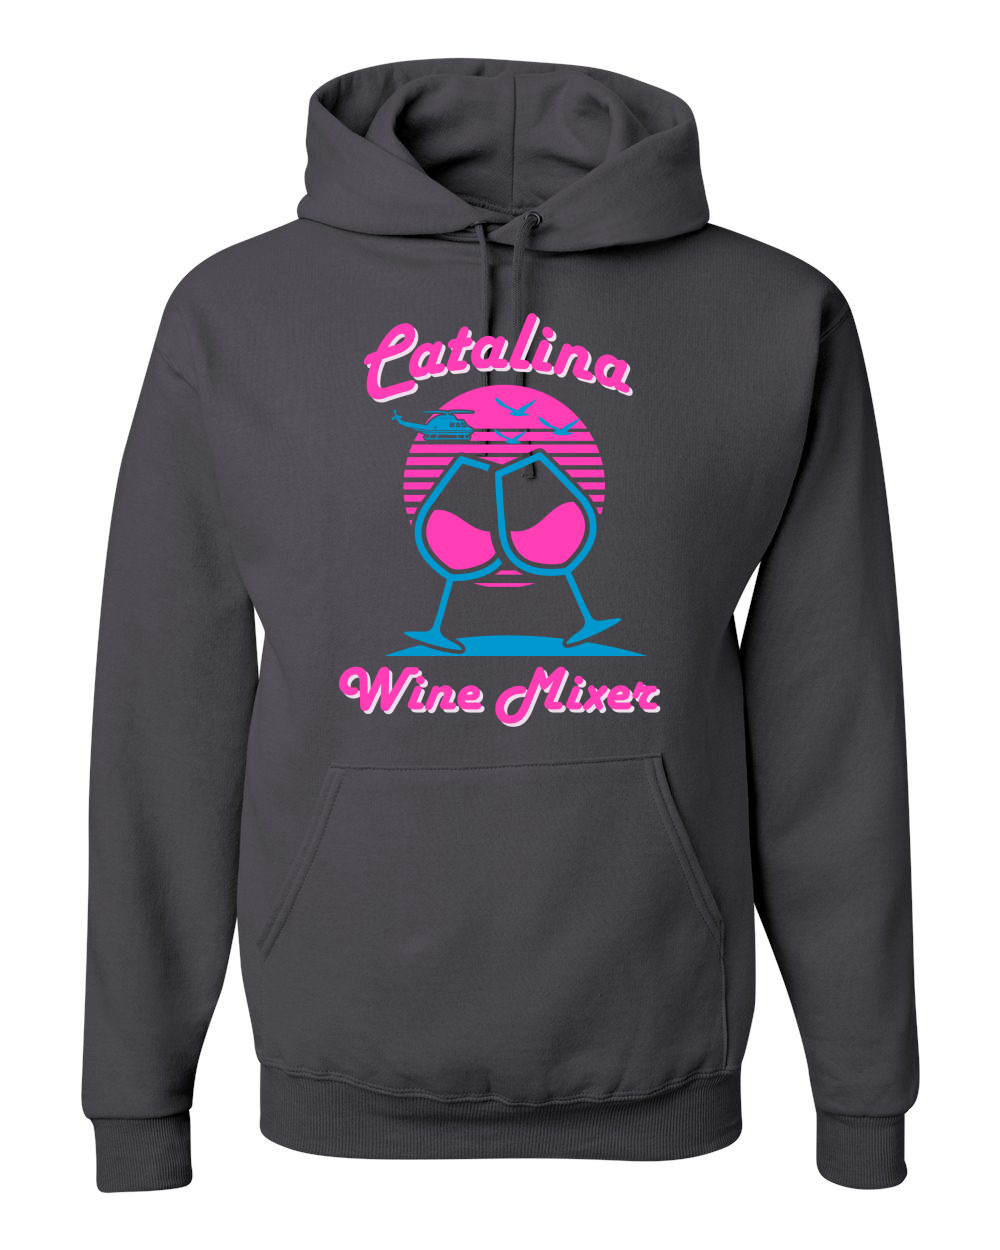 Catalina Wine Mixer Island Prestige Movie| Mens Pop Culture Hooded Sweatshirt Graphic Hoodie, Charcoal, X-Large - image 1 of 4